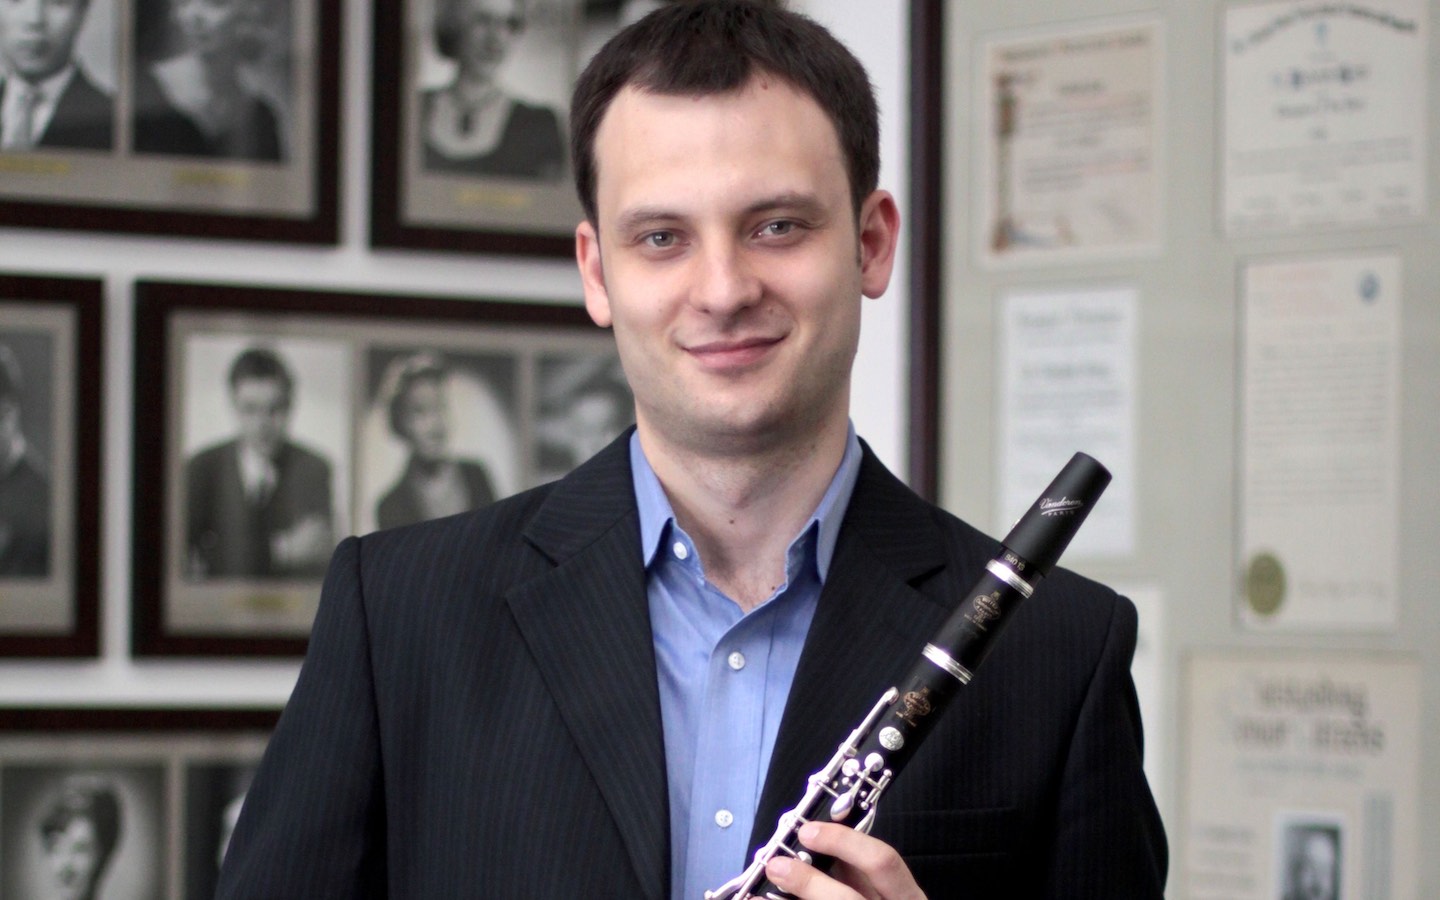 Roosevelt Chicago College of Performing Arts alum Sergey Gutorov, holding a clarinet